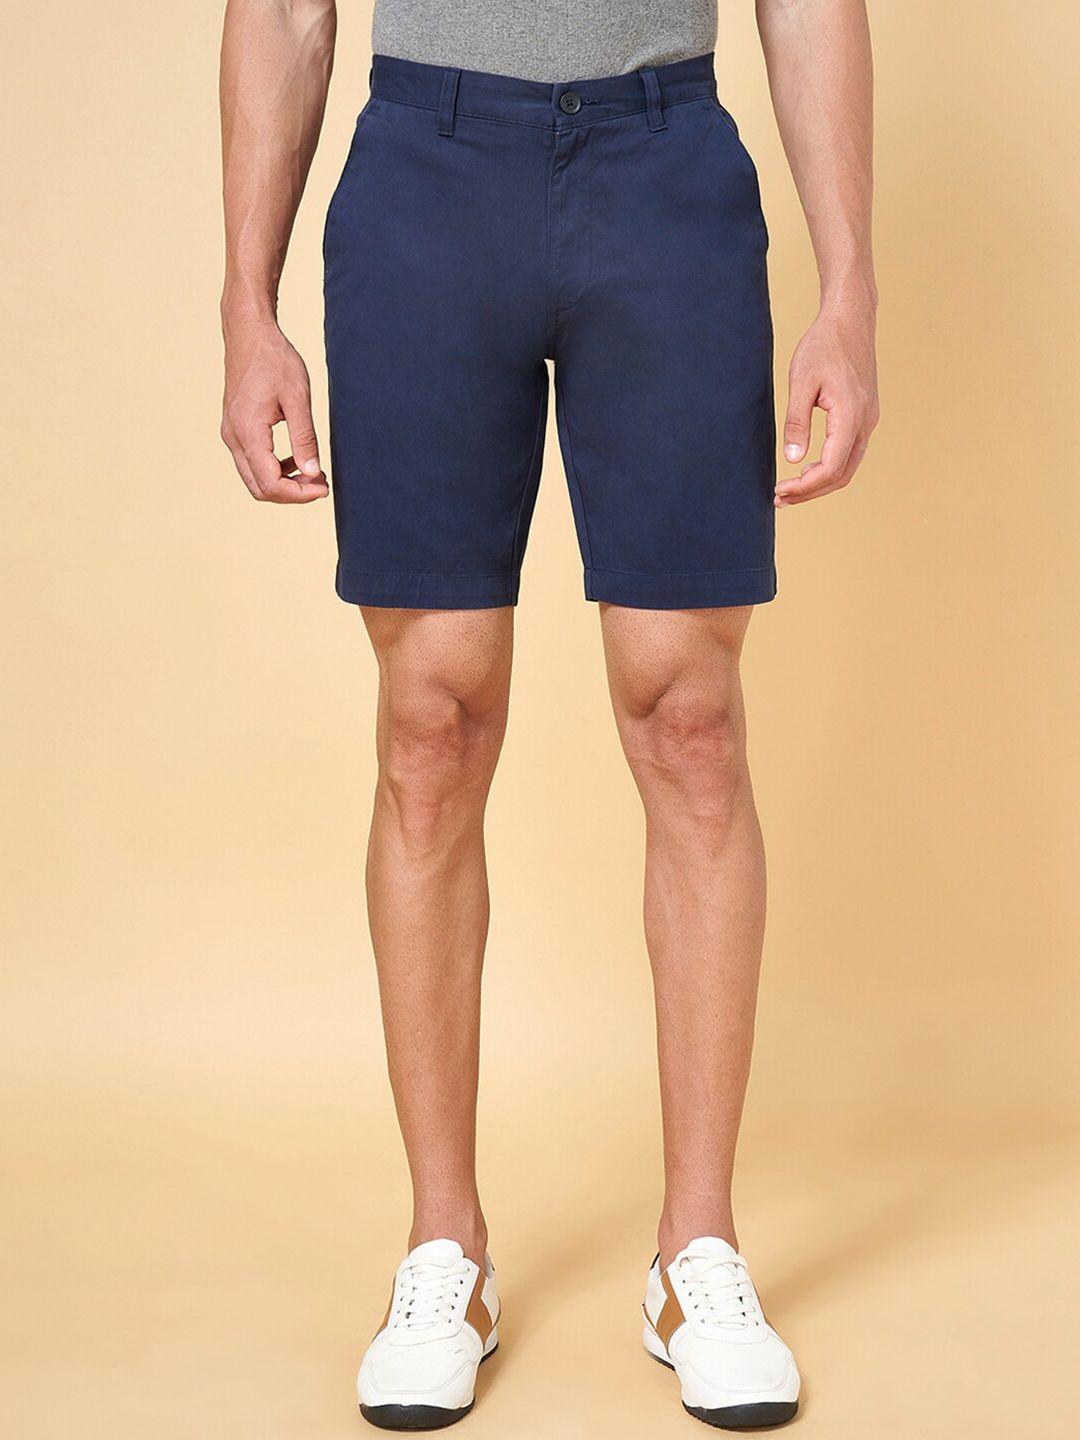 byford-by-pantaloons-men-slim-fit-mid-rise-chino-shorts